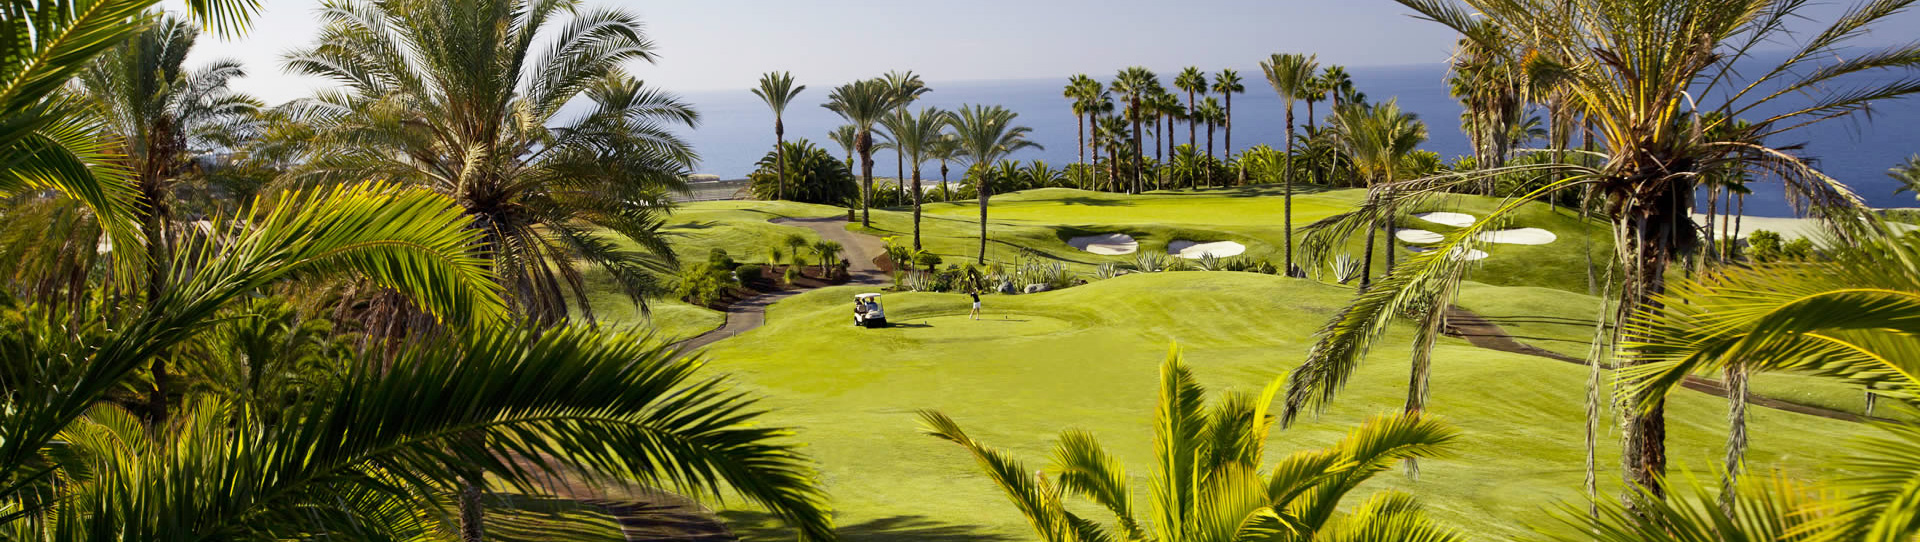 Spain golf courses - Abama Golf Course - Photo 2